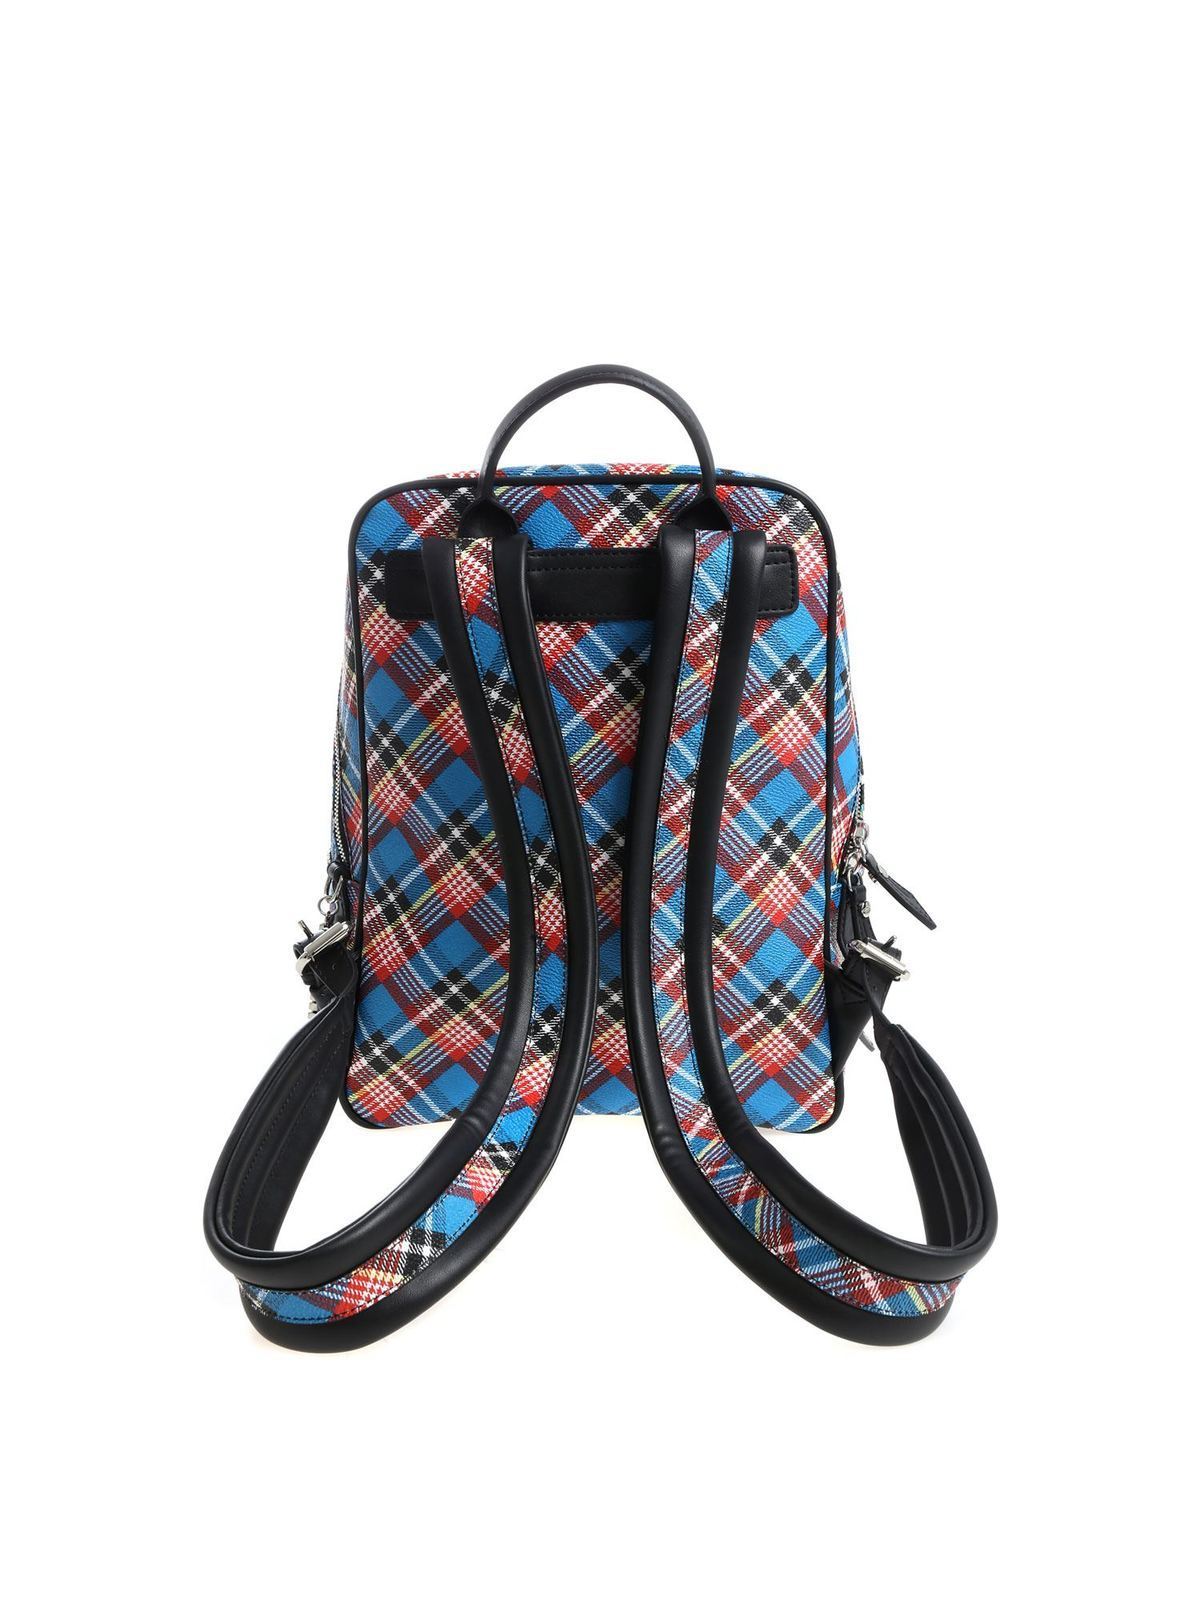 Vivienne Westwood Anglomania ■ SHUKA TARTAN 2wayバッグ PVC ブルー バッグ / バック / BAG / 鞄 / カバン ブランド  [0990009727]